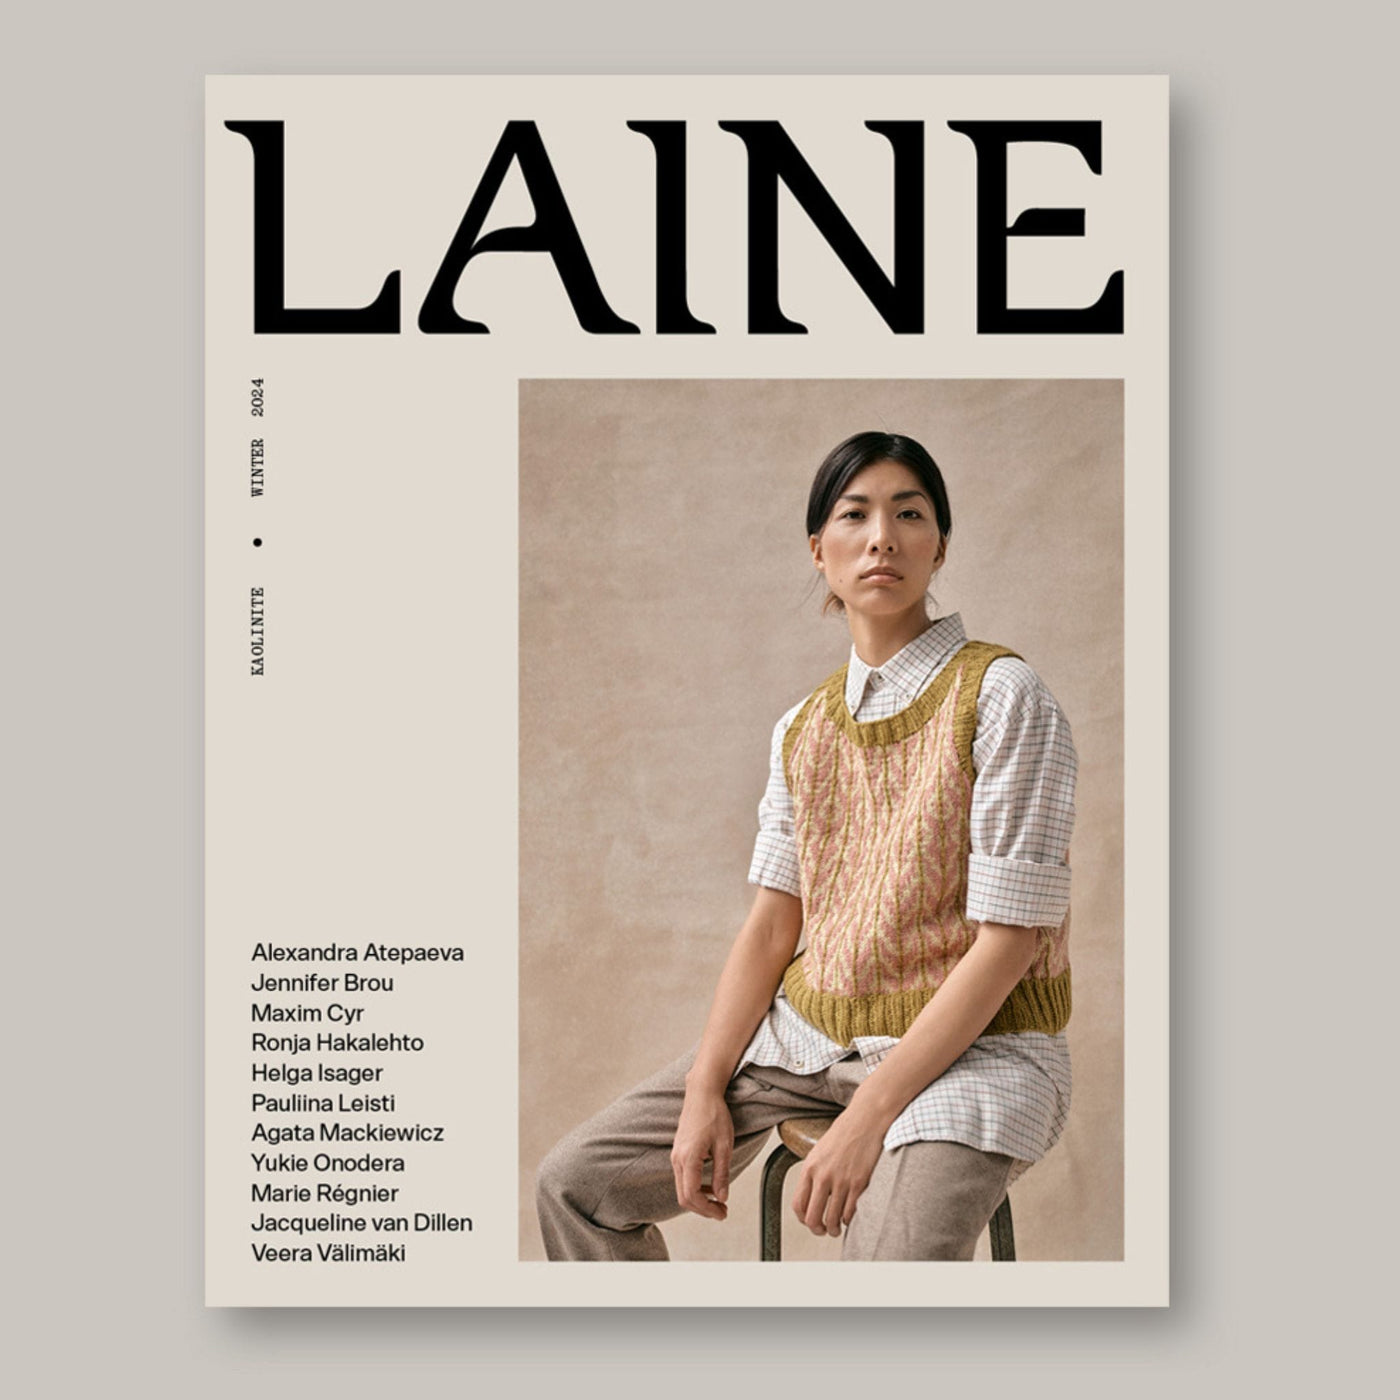 Laine Magazine, Issue 19